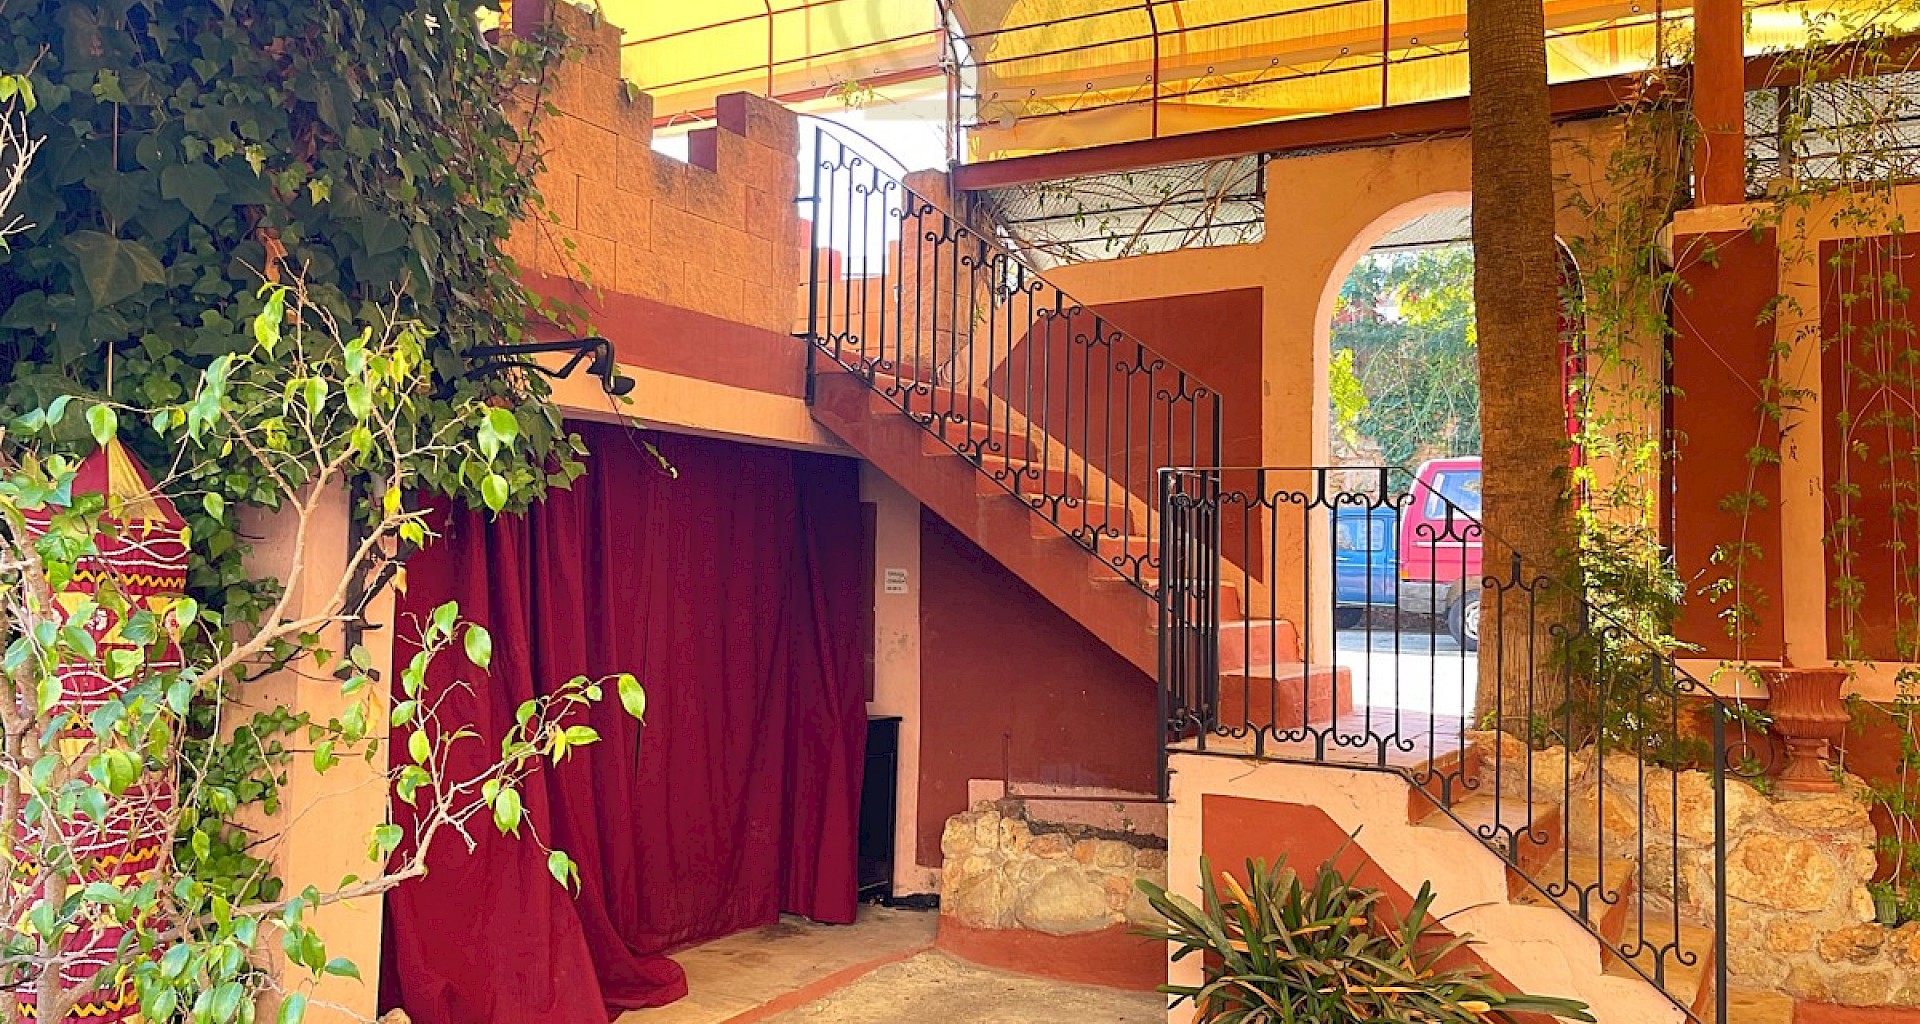 KROHN & LUEDEMANN Villa histórica en El Terreno - Palma de Mallorca con licencia hotelera renovable 